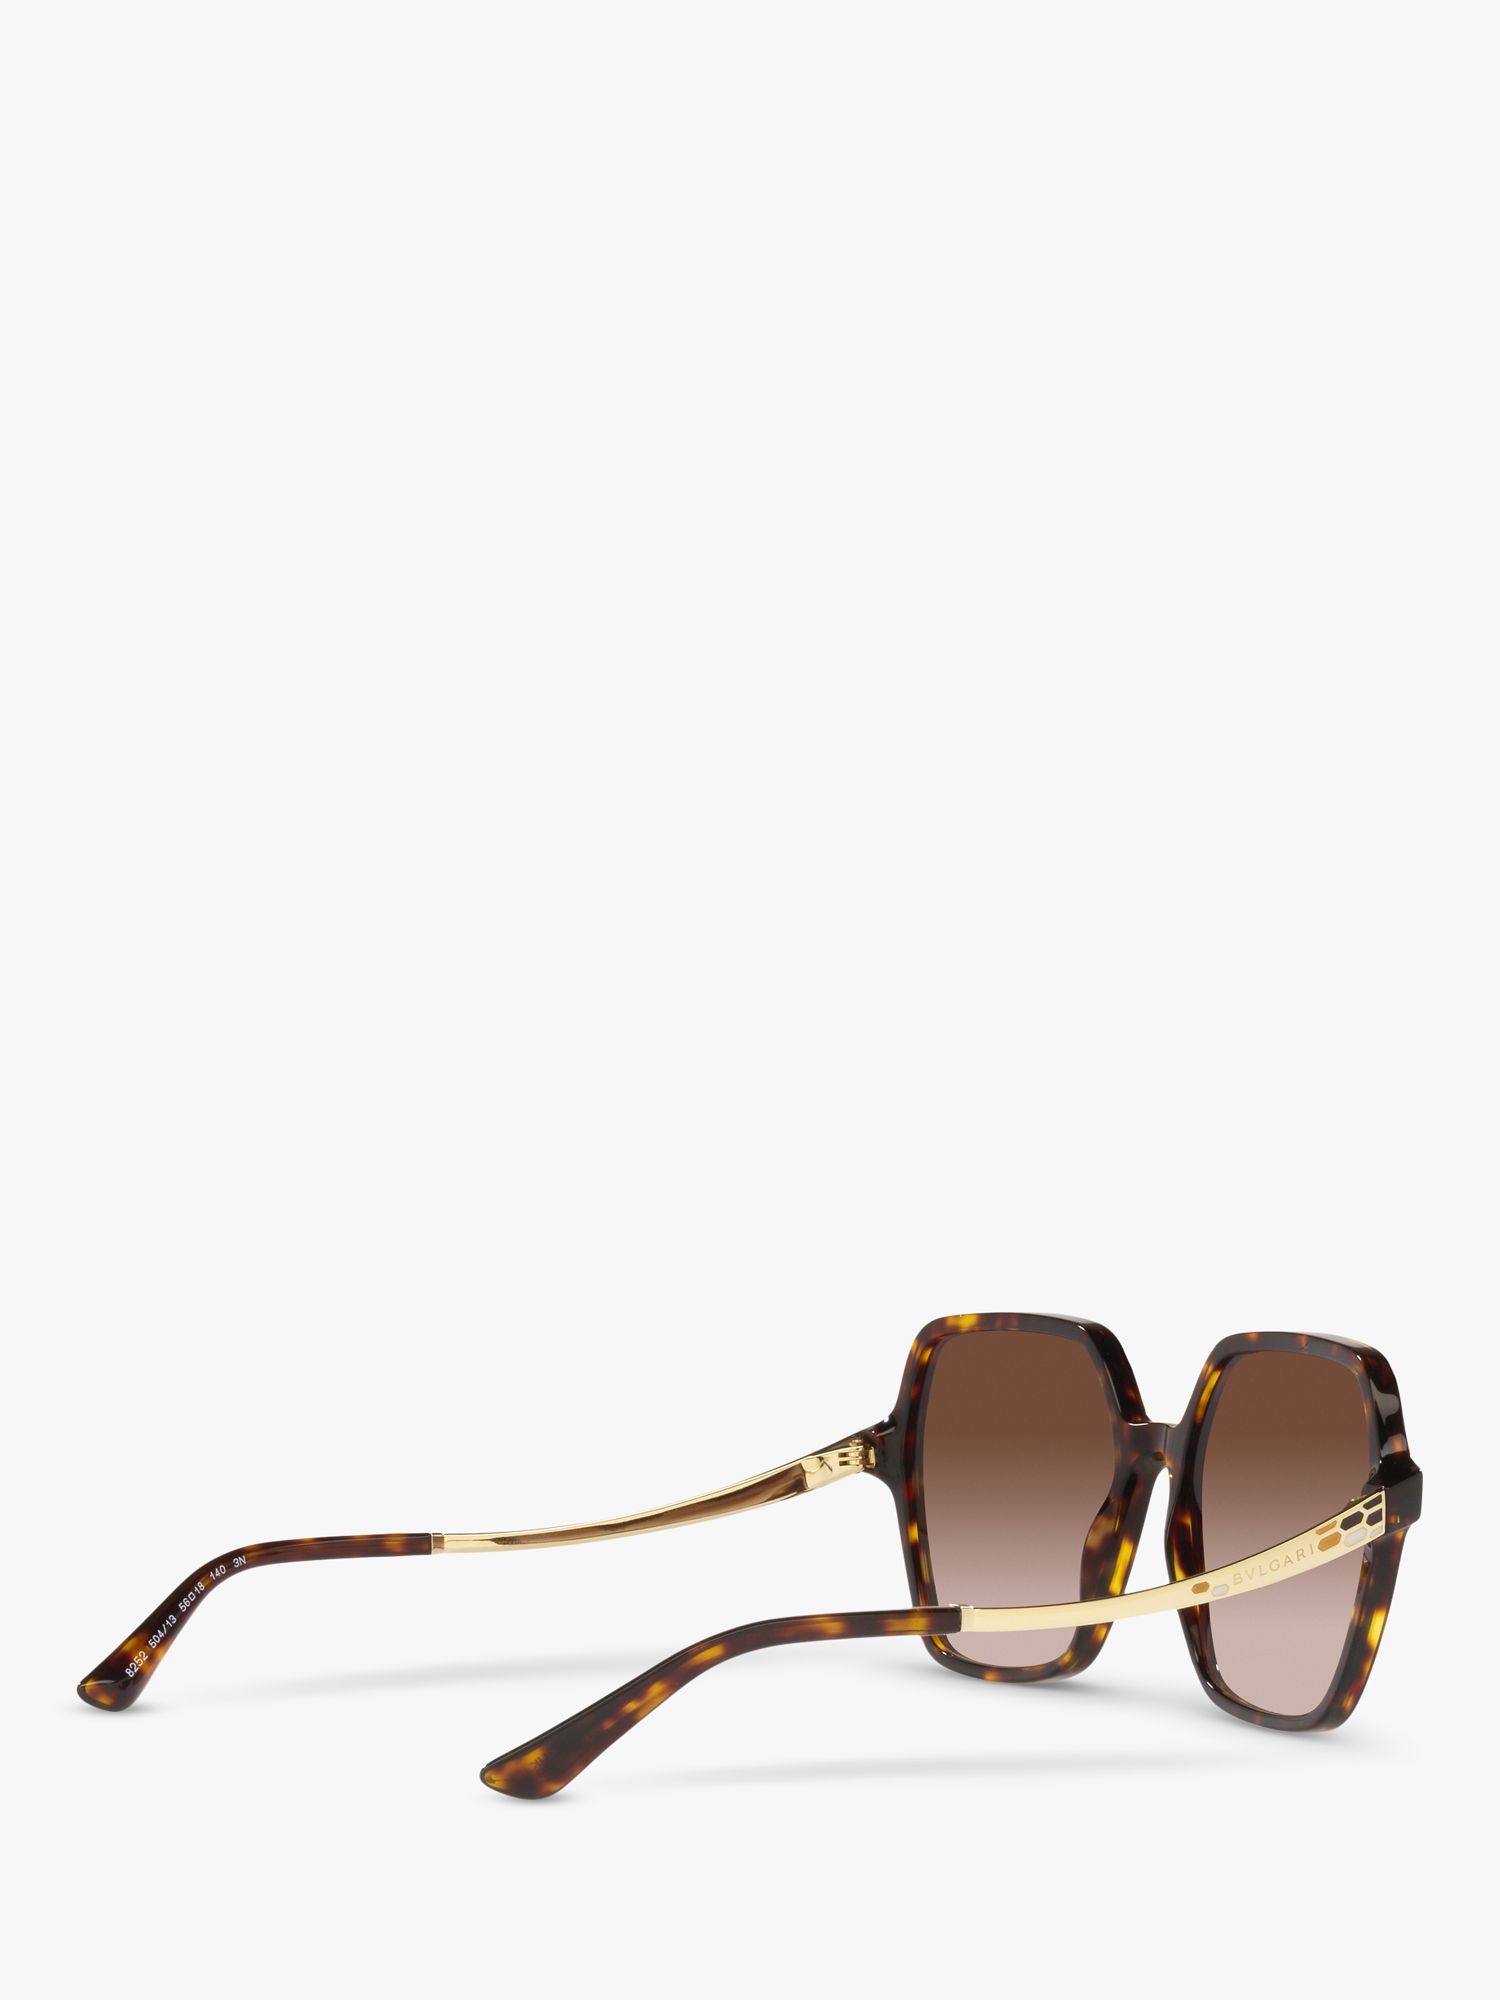 Buy BVLGARI BV8252 Women's Irregular Sunglasses Online at johnlewis.com